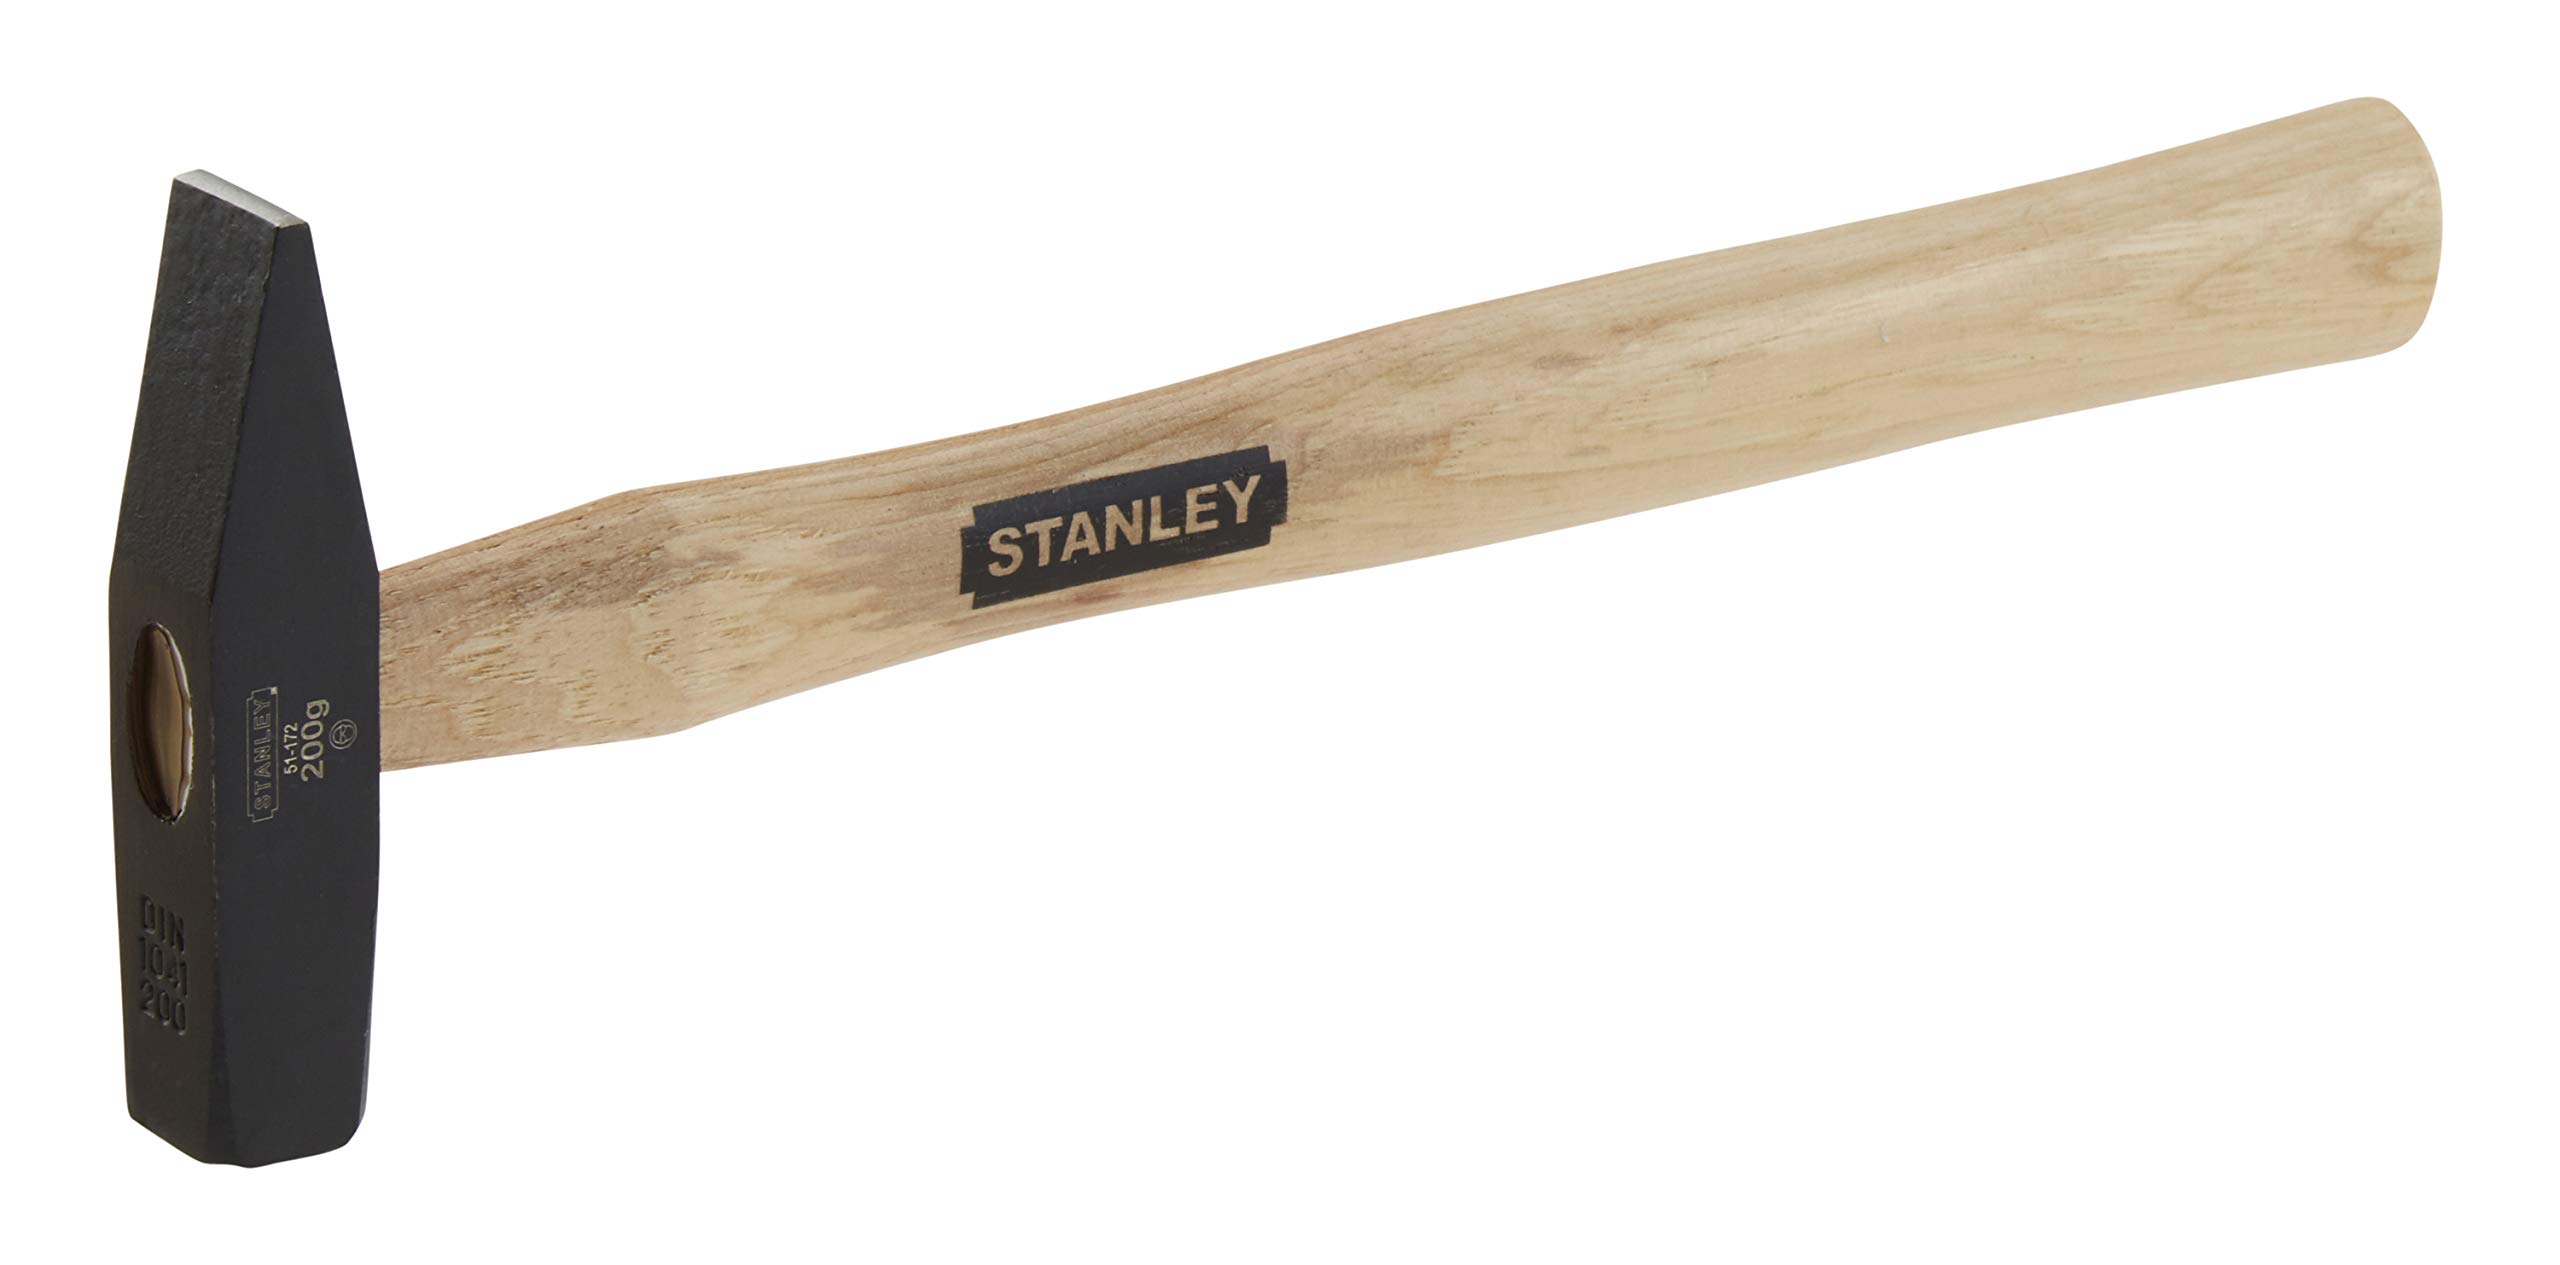 Metalworks 200gr Hammer with Wooden Handle Stanley